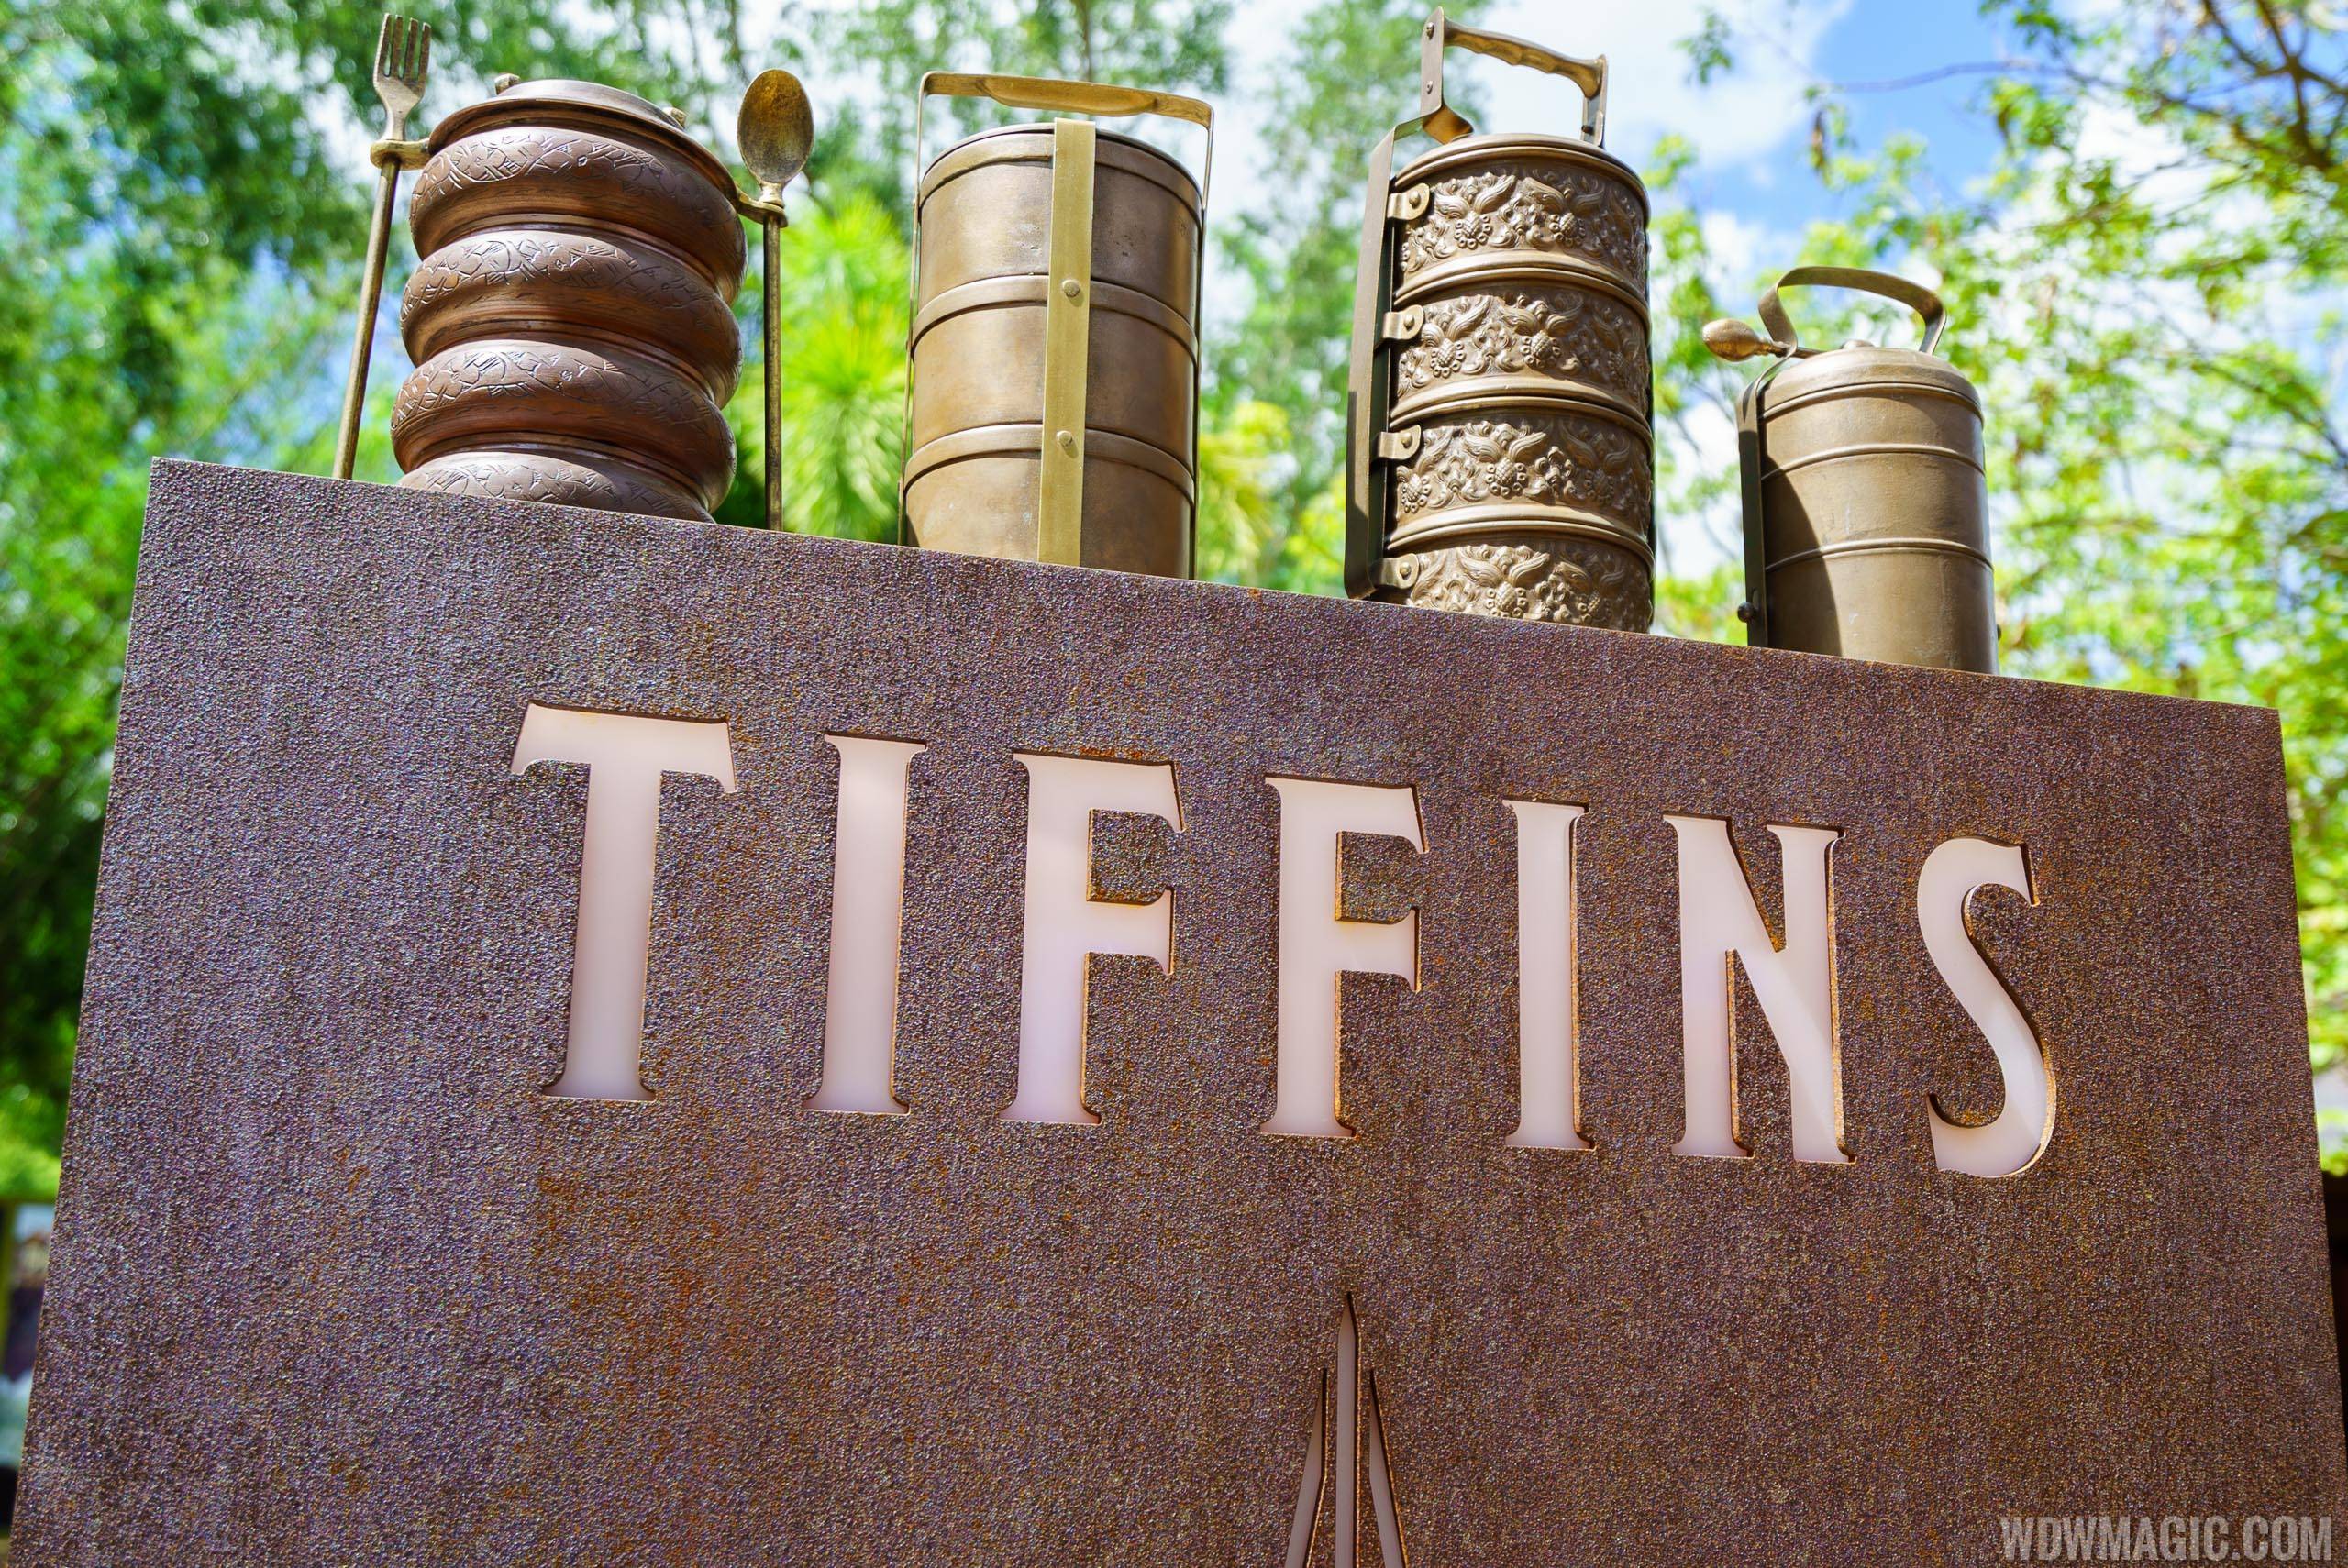 Tiffins overview